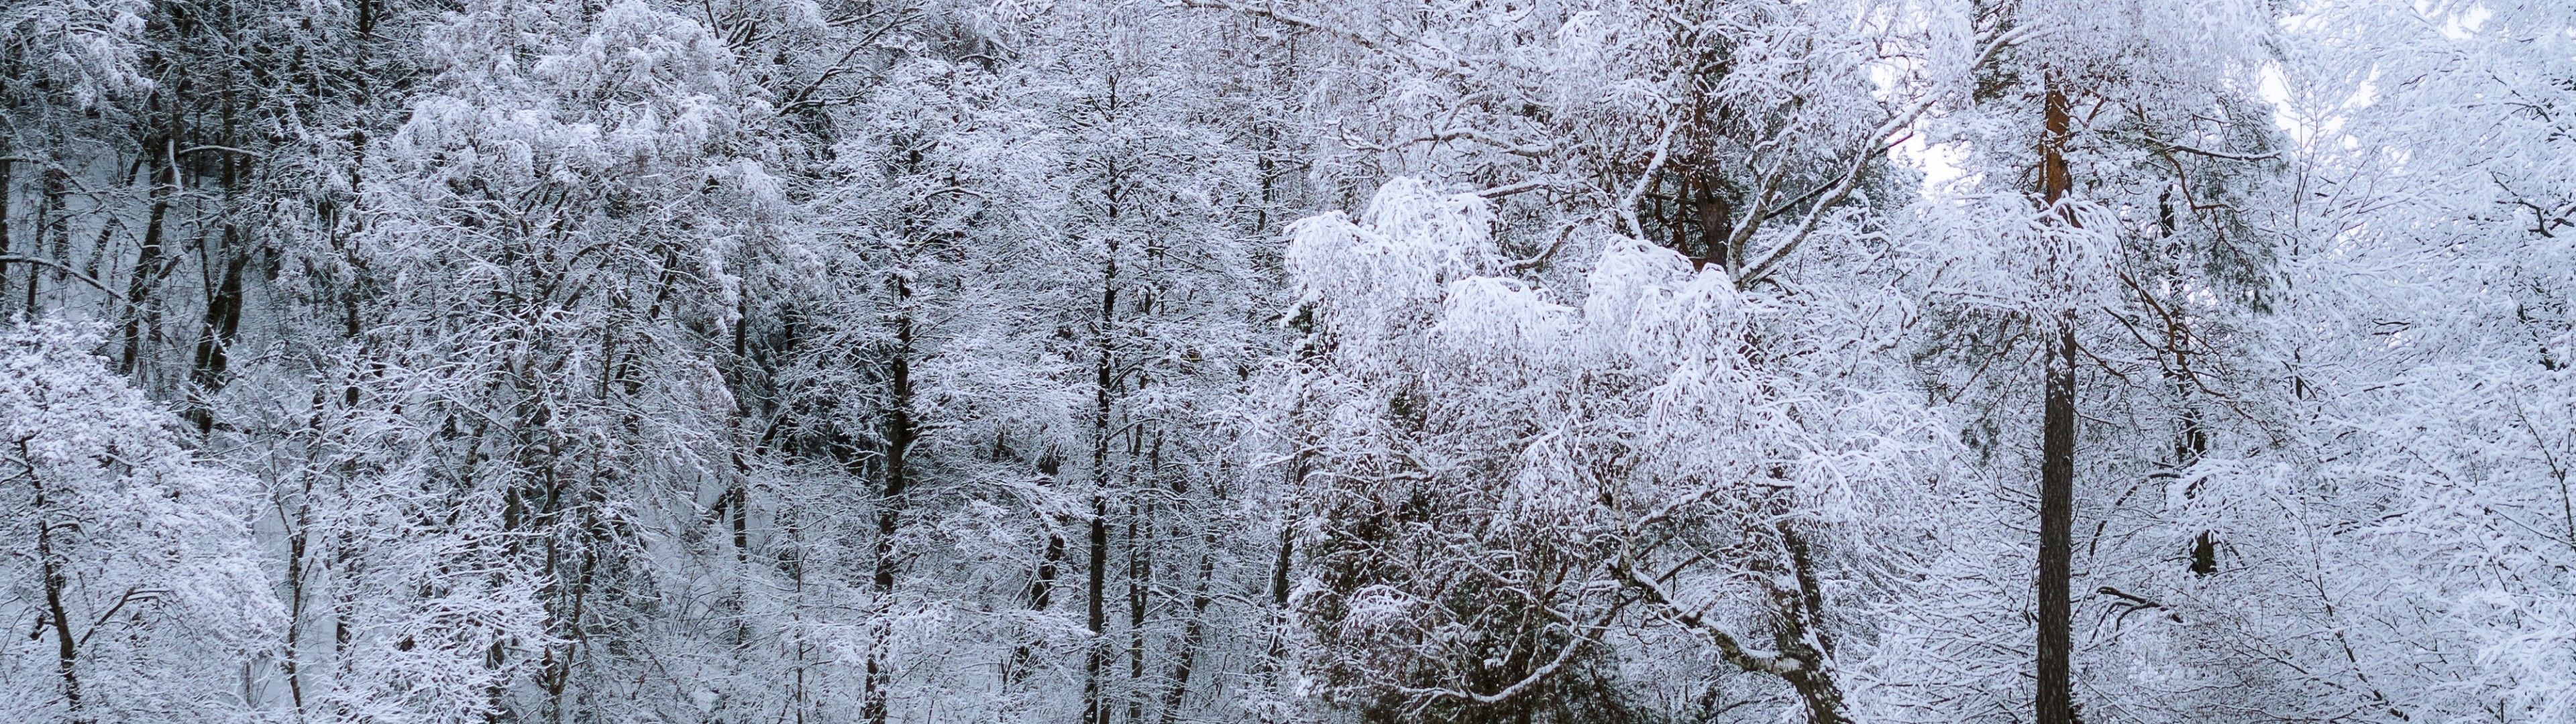 Download 3840x1080 Snowy Forest, Walking Man, Path, Trees, Frost, Winter Wallpaper